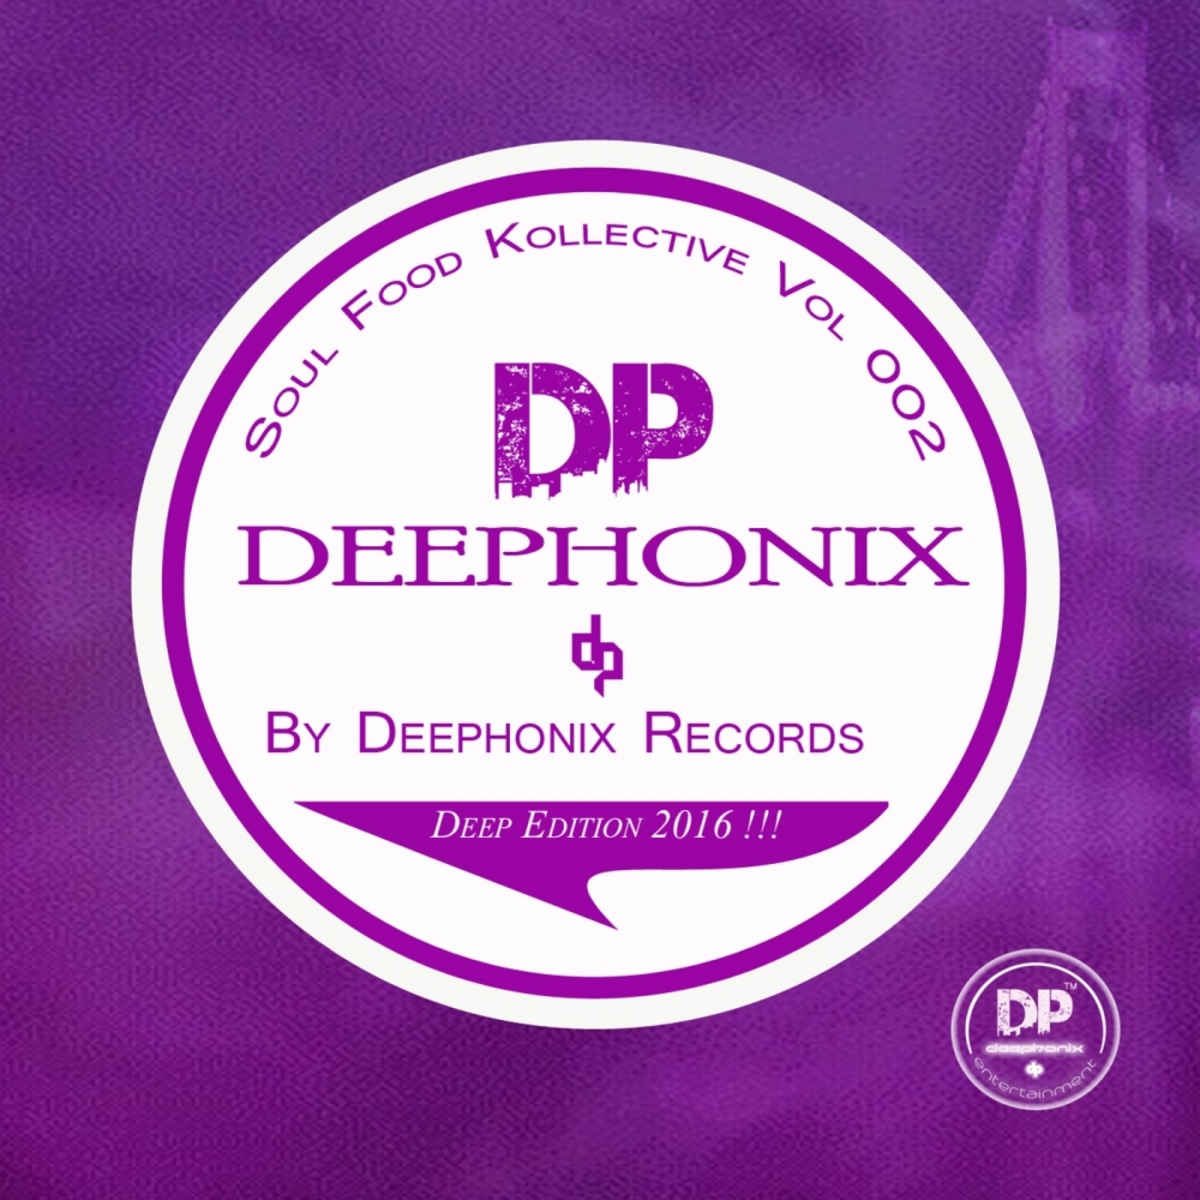 Deephonix Records - Soul Food Kollective Vol2 [Deep Edition] / Deephonix